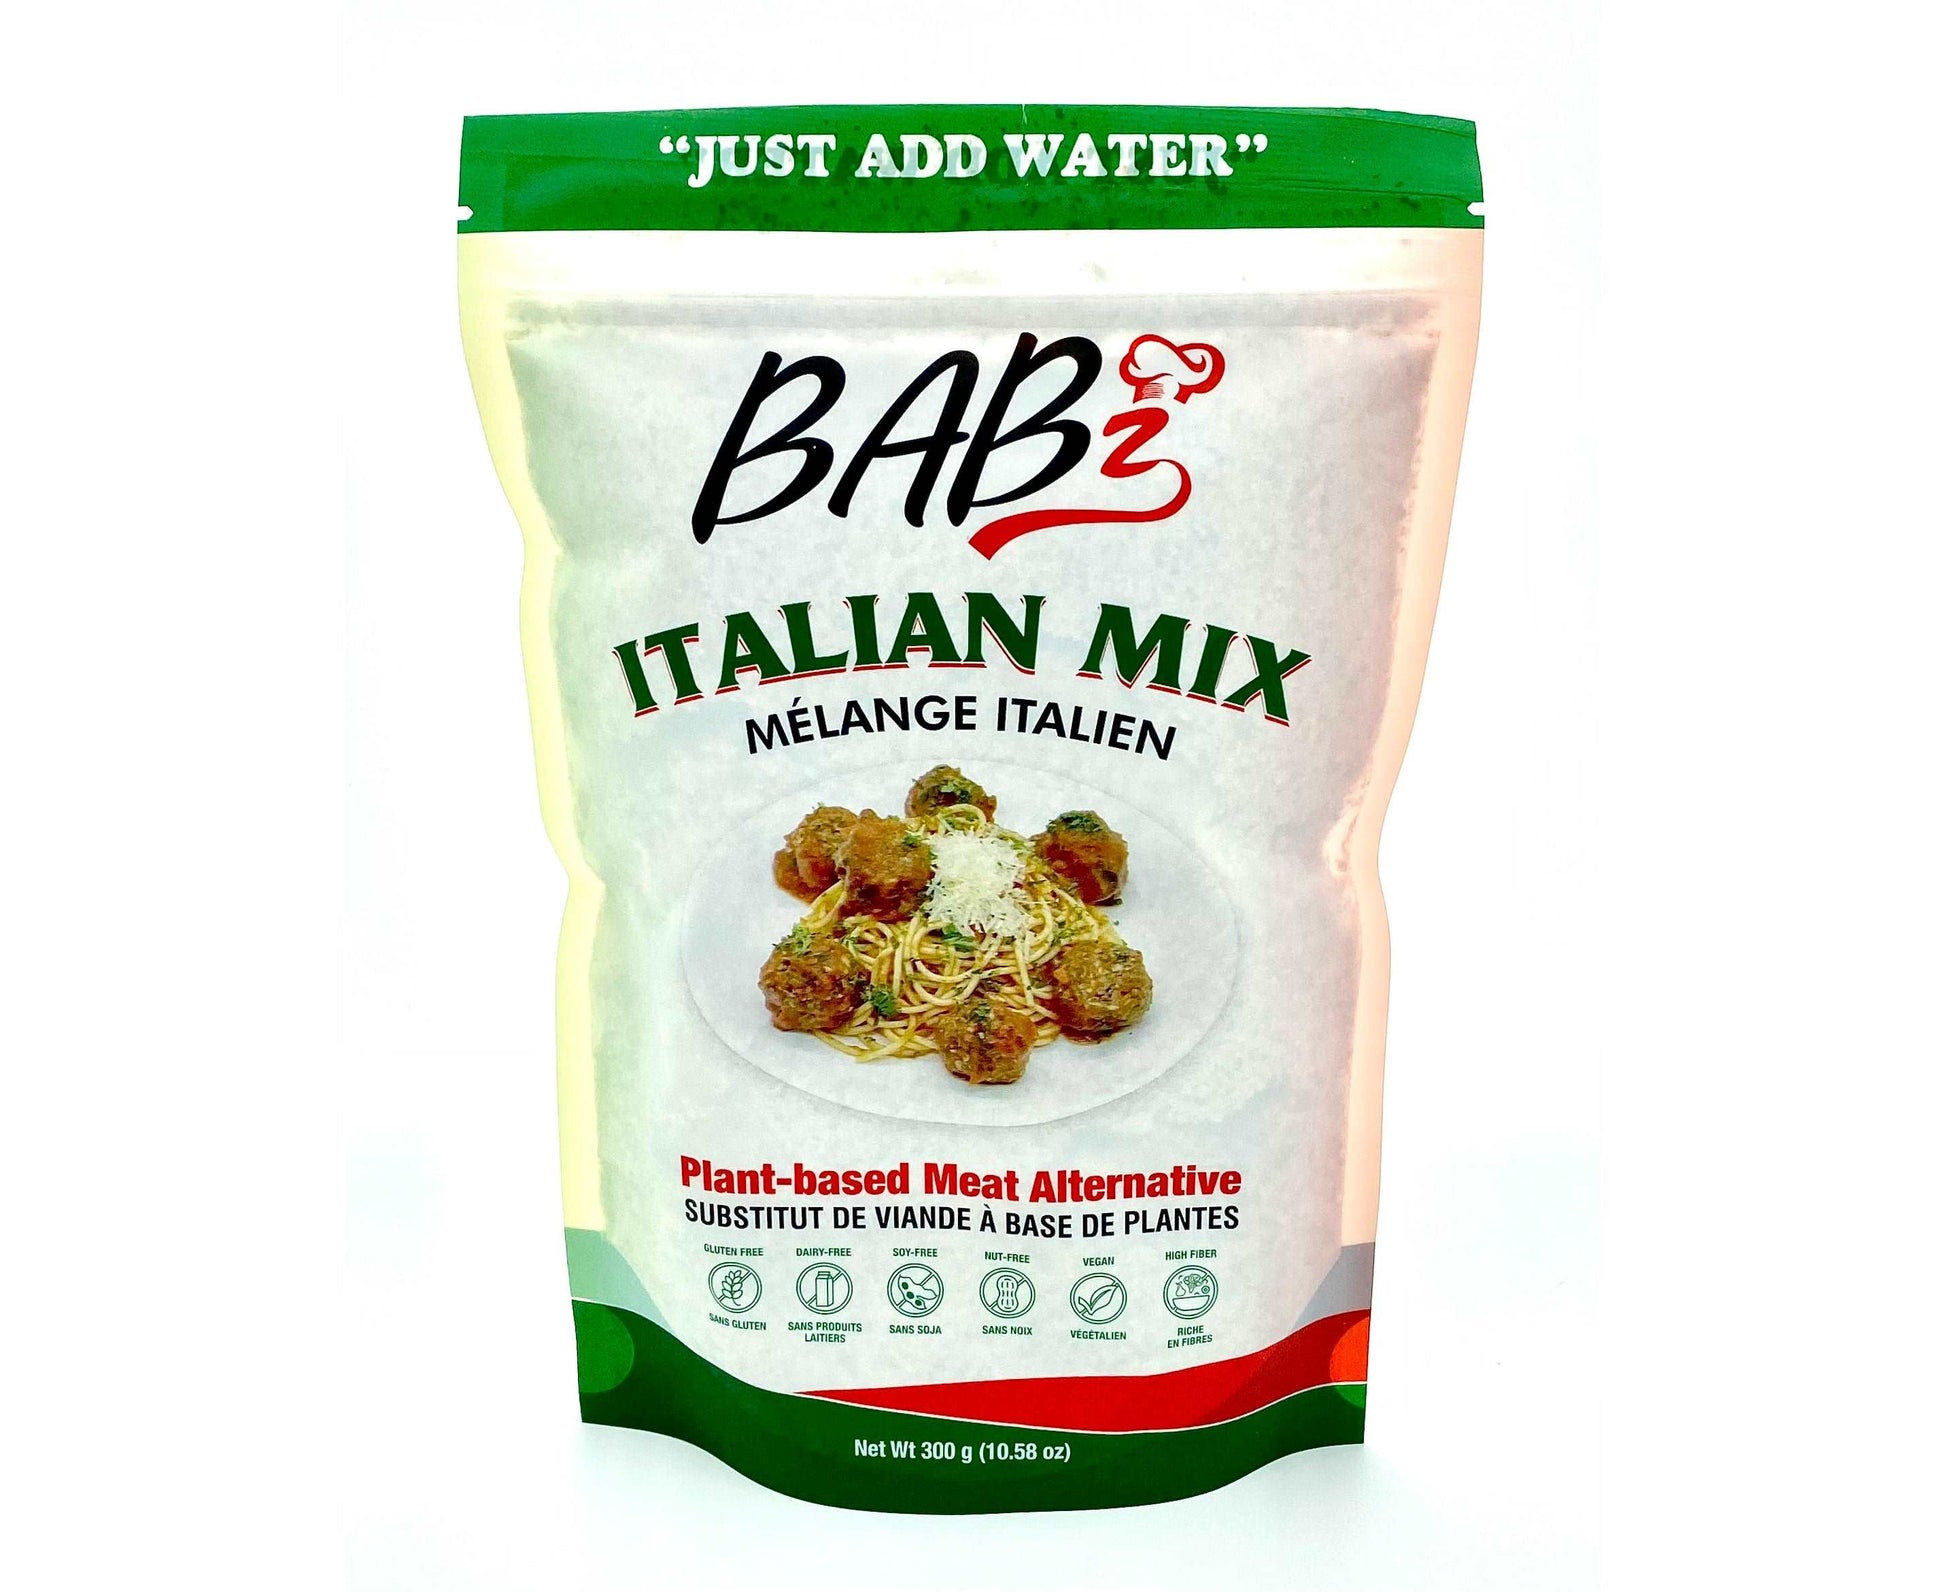 Babz Italian Plant Based Meat Alternative Mix. "Just Add Water"